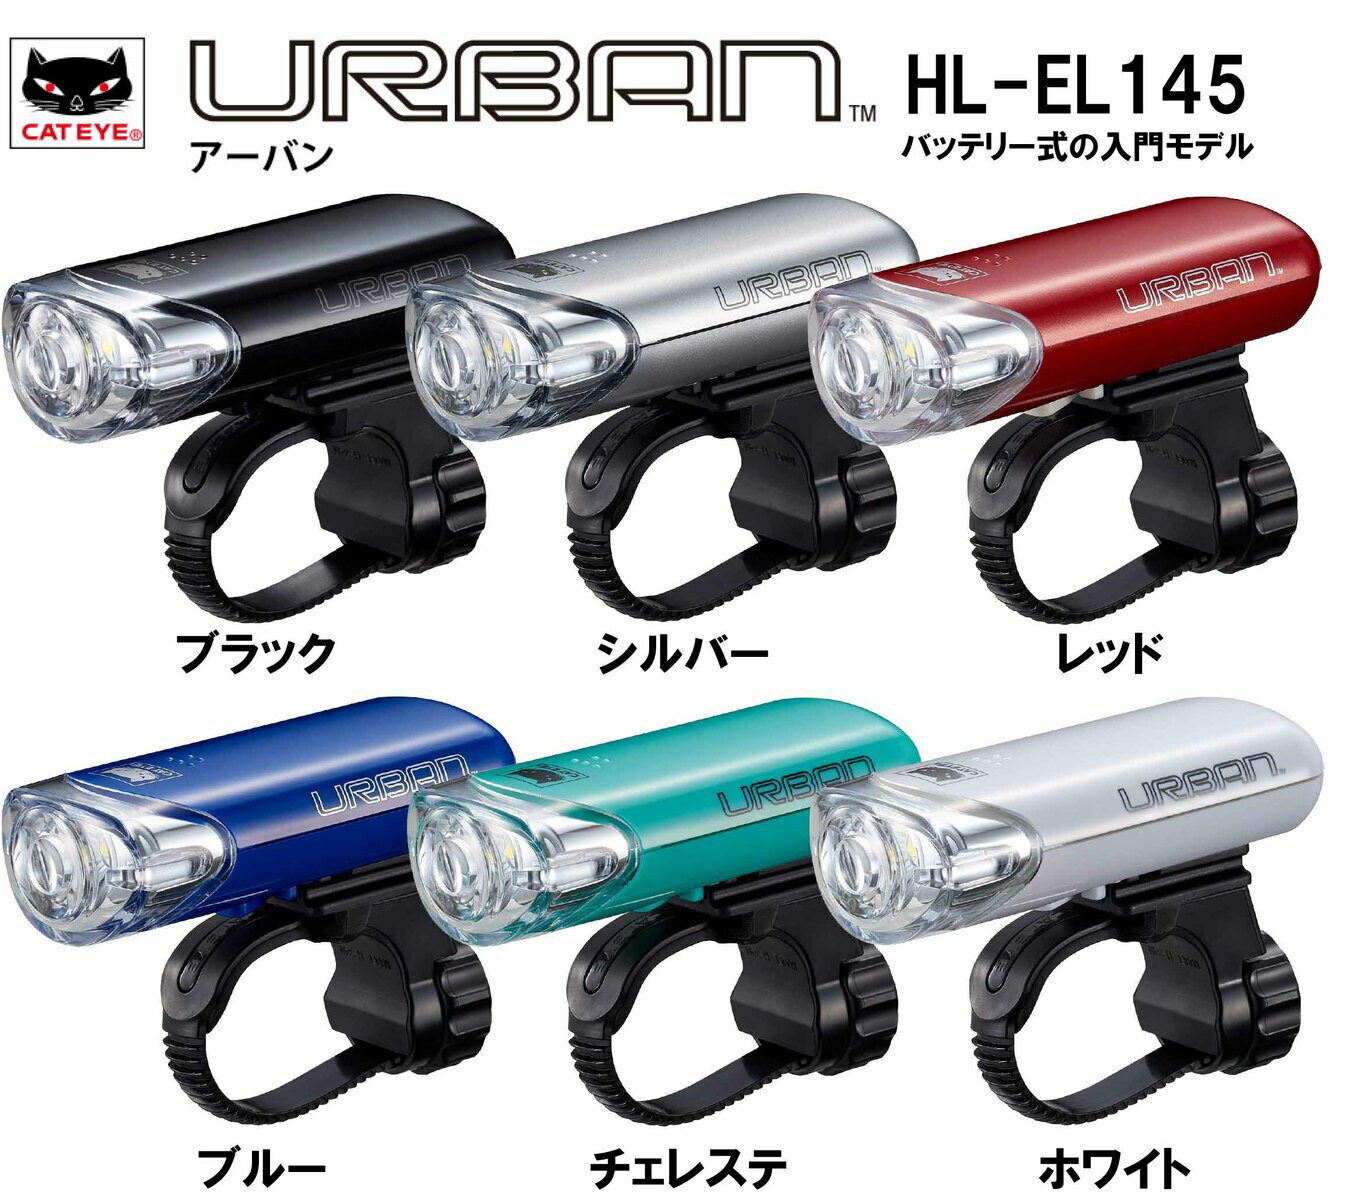 【CATEYE/キャットアイ】1LEDヘッドライト【HL-EL145】自転車用 LEDライト 理想的な配光を実現 HL-EL145 URBAN EL-140 後継 ライト LED ヘッドライト ハンドル ライト 電池式